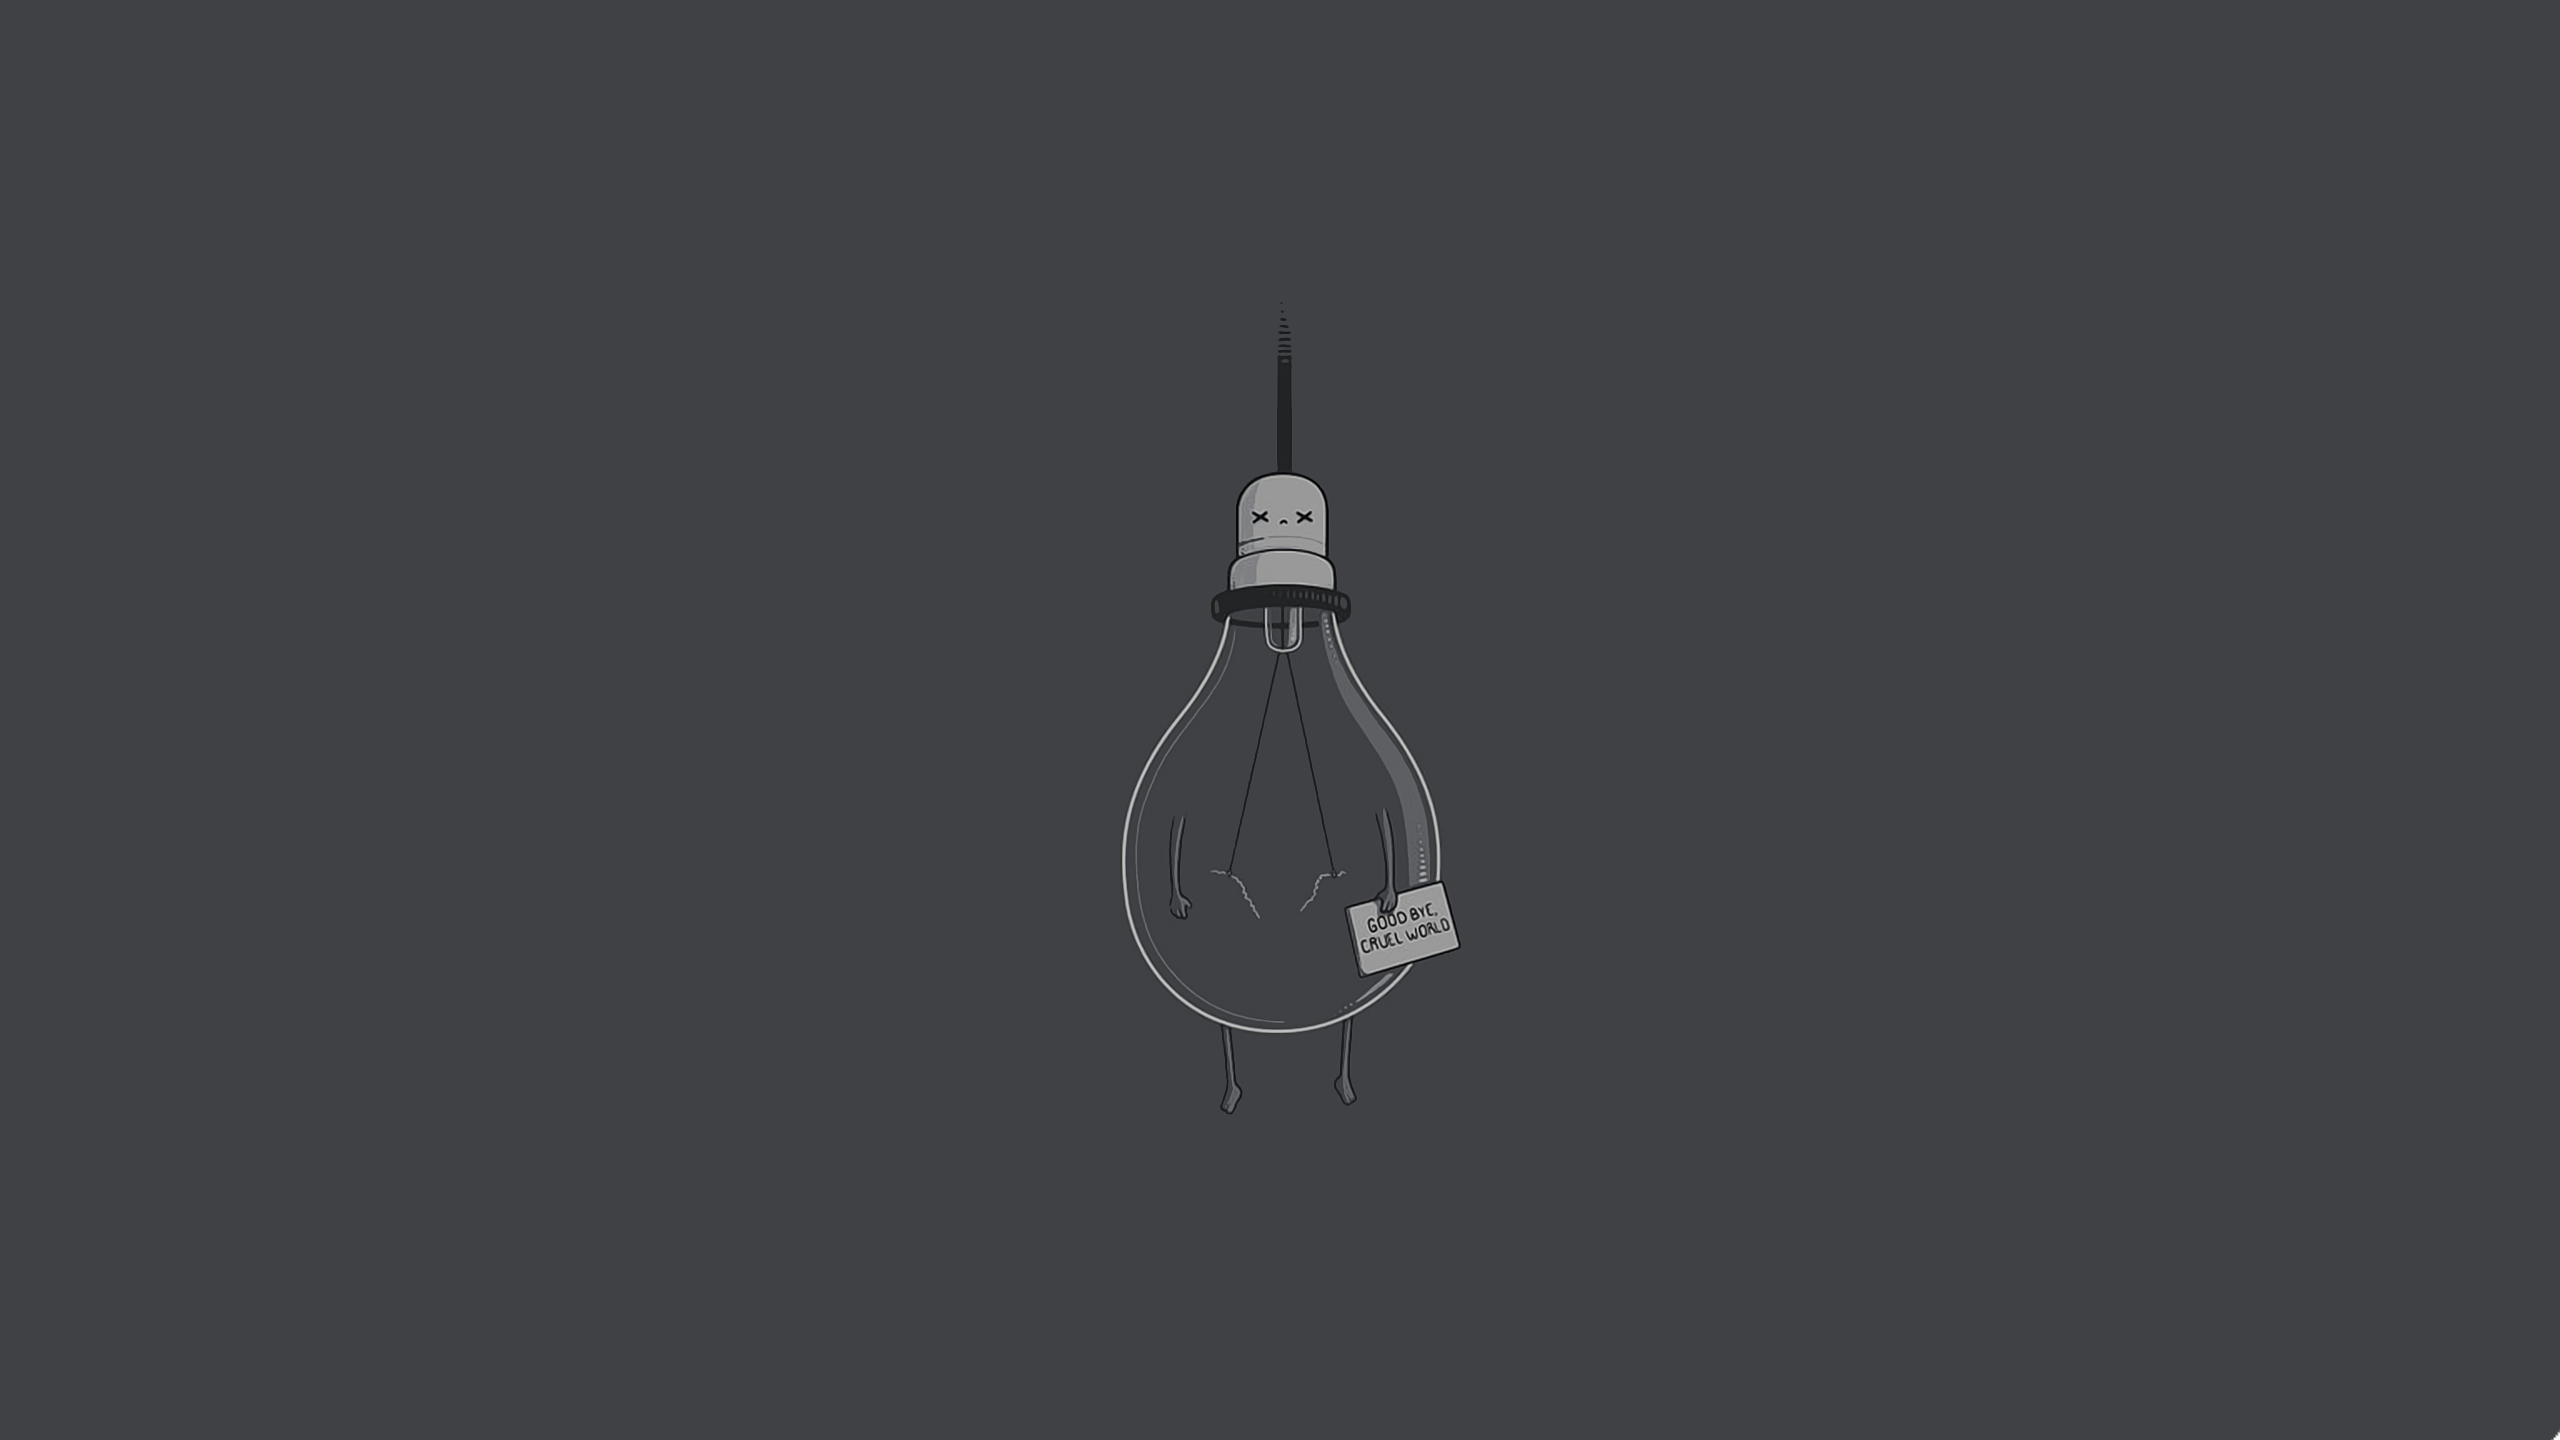 minimalism, #simple, #lightbulb, #humor, #dark humor wallpaper. Light bulb, Light bulb illustration, Bulb